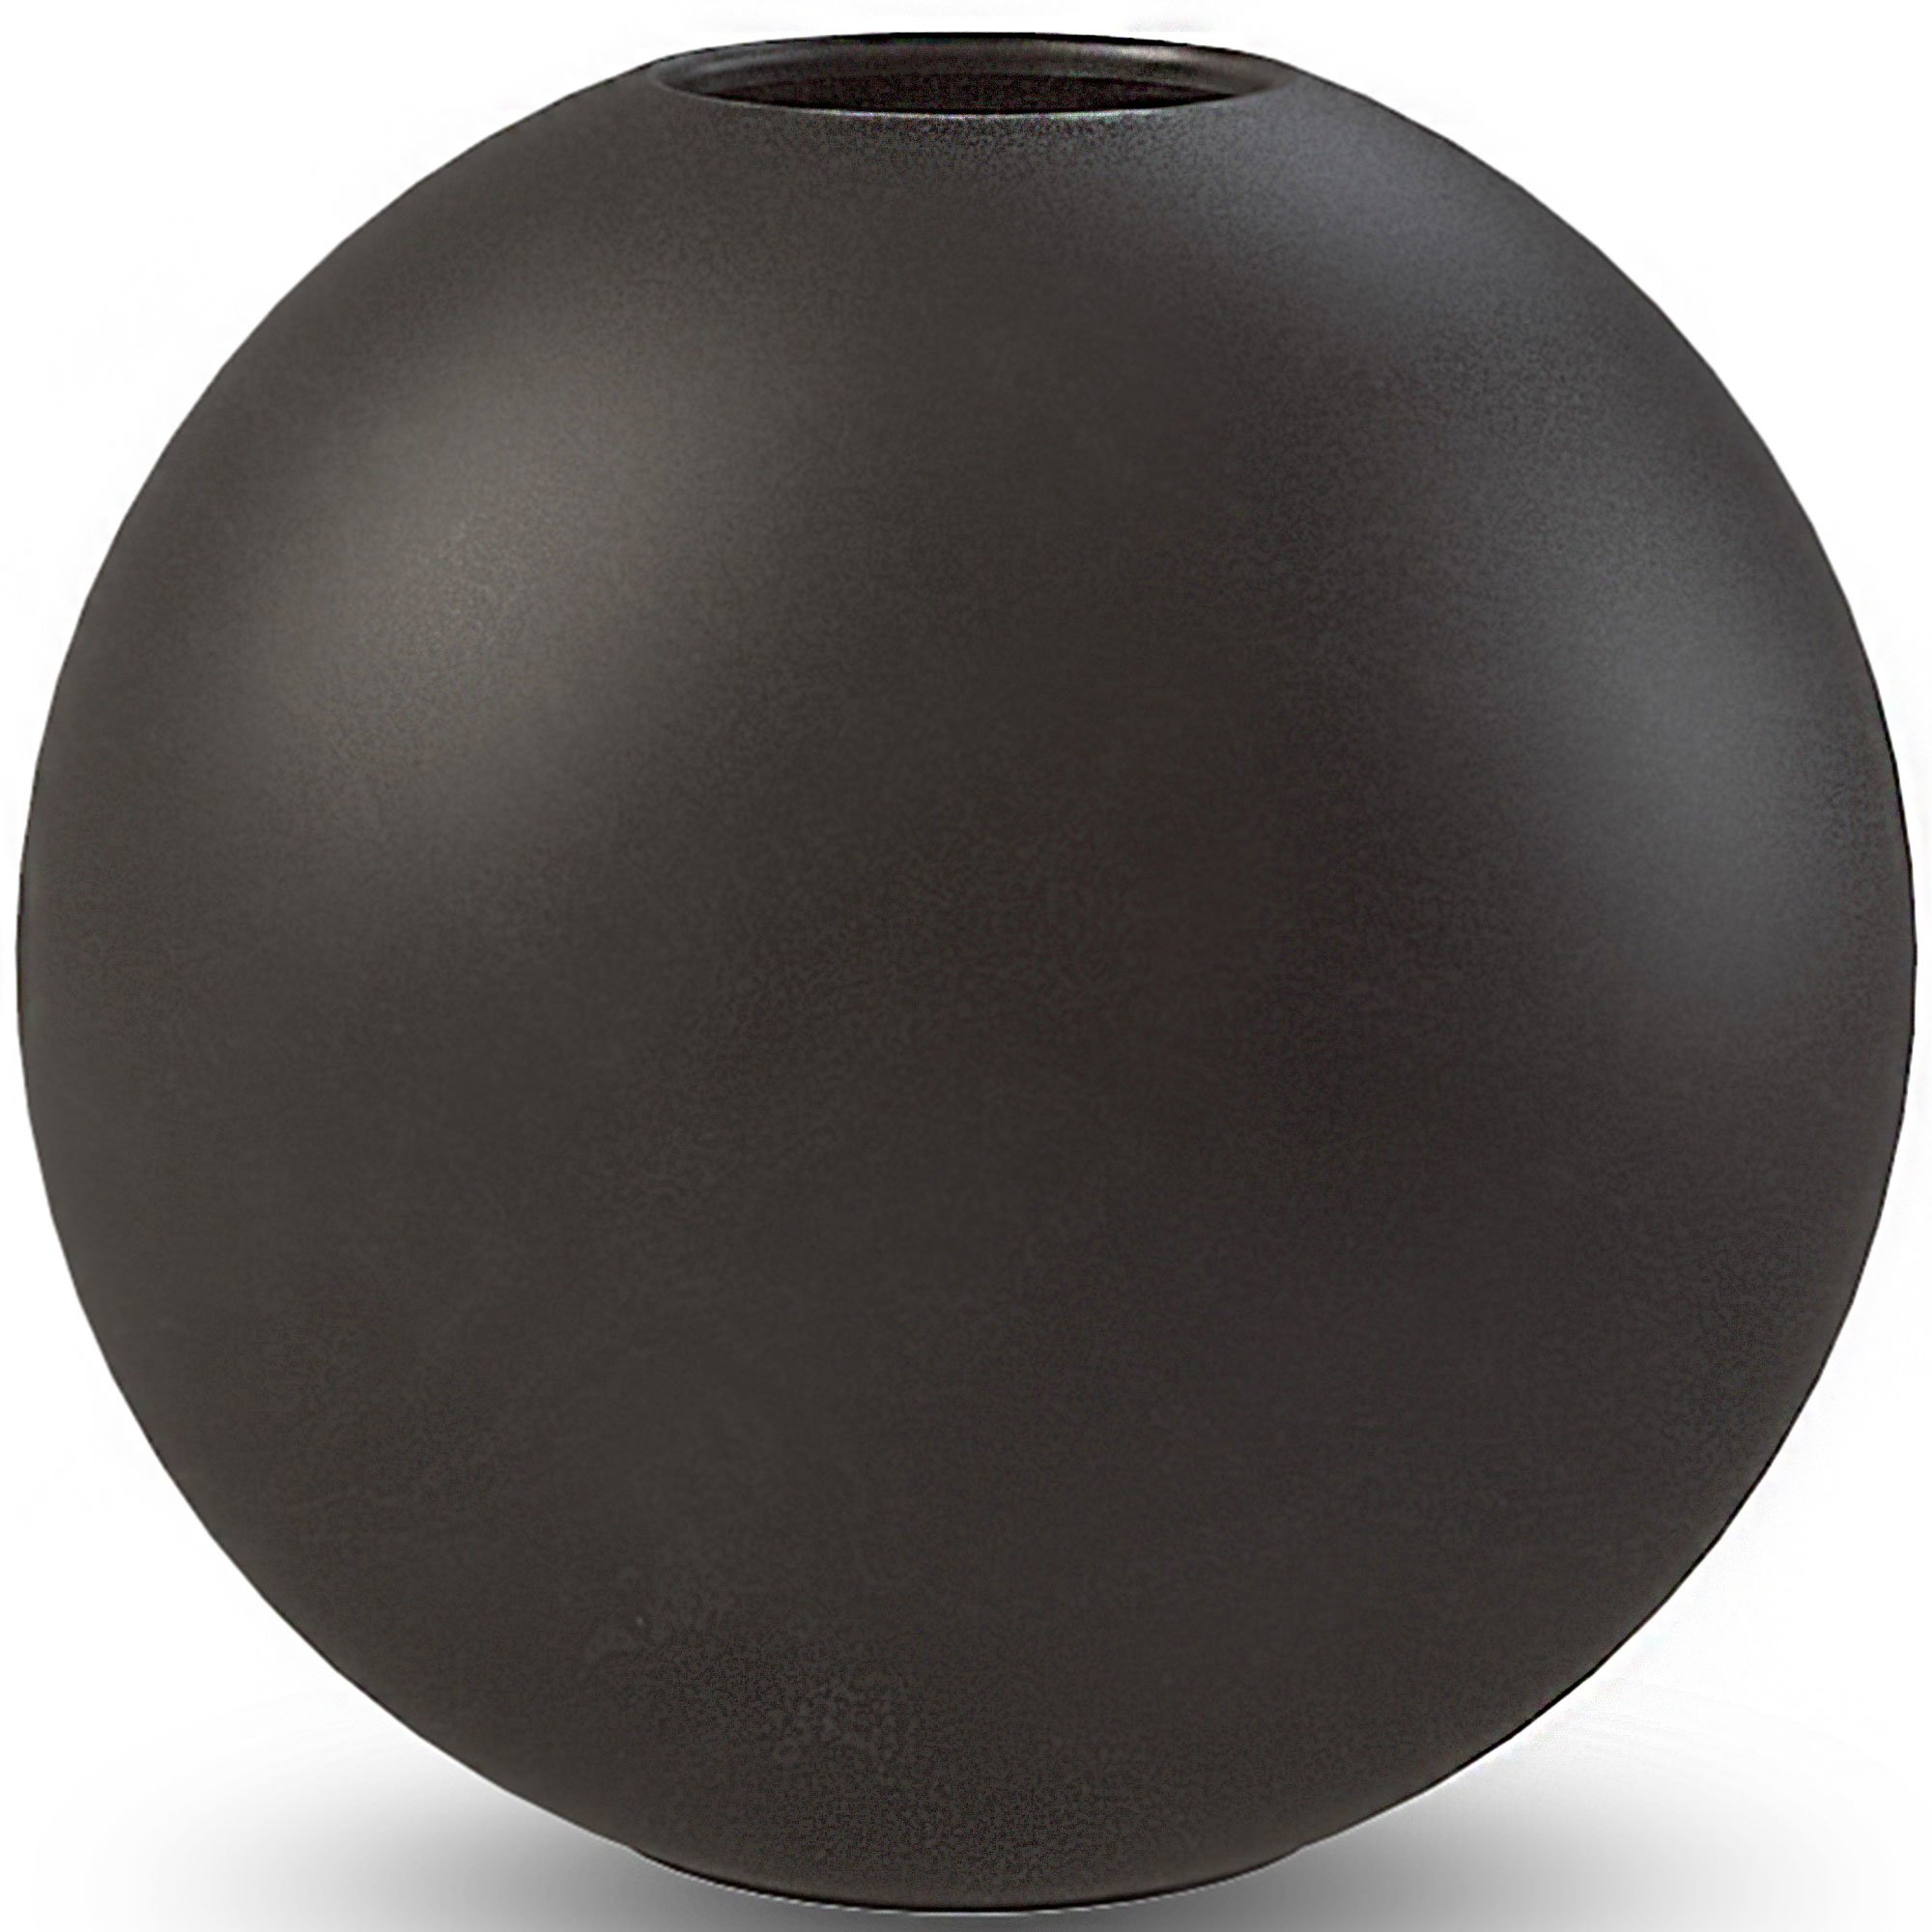 Cooee Design Ball vas 10 cm black